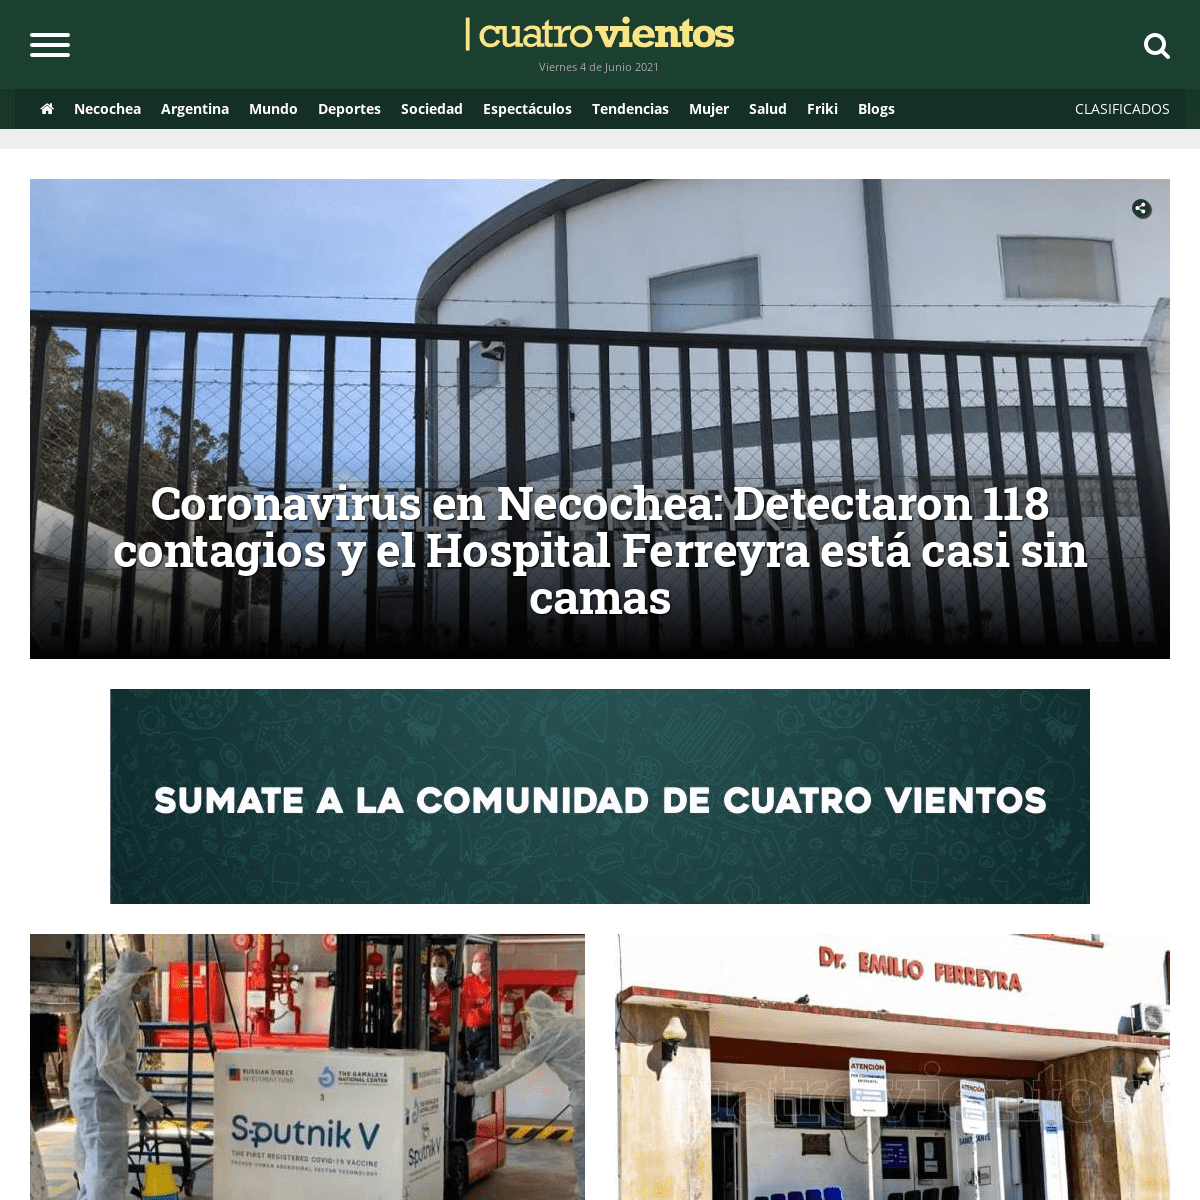 A complete backup of https://diario4v.com